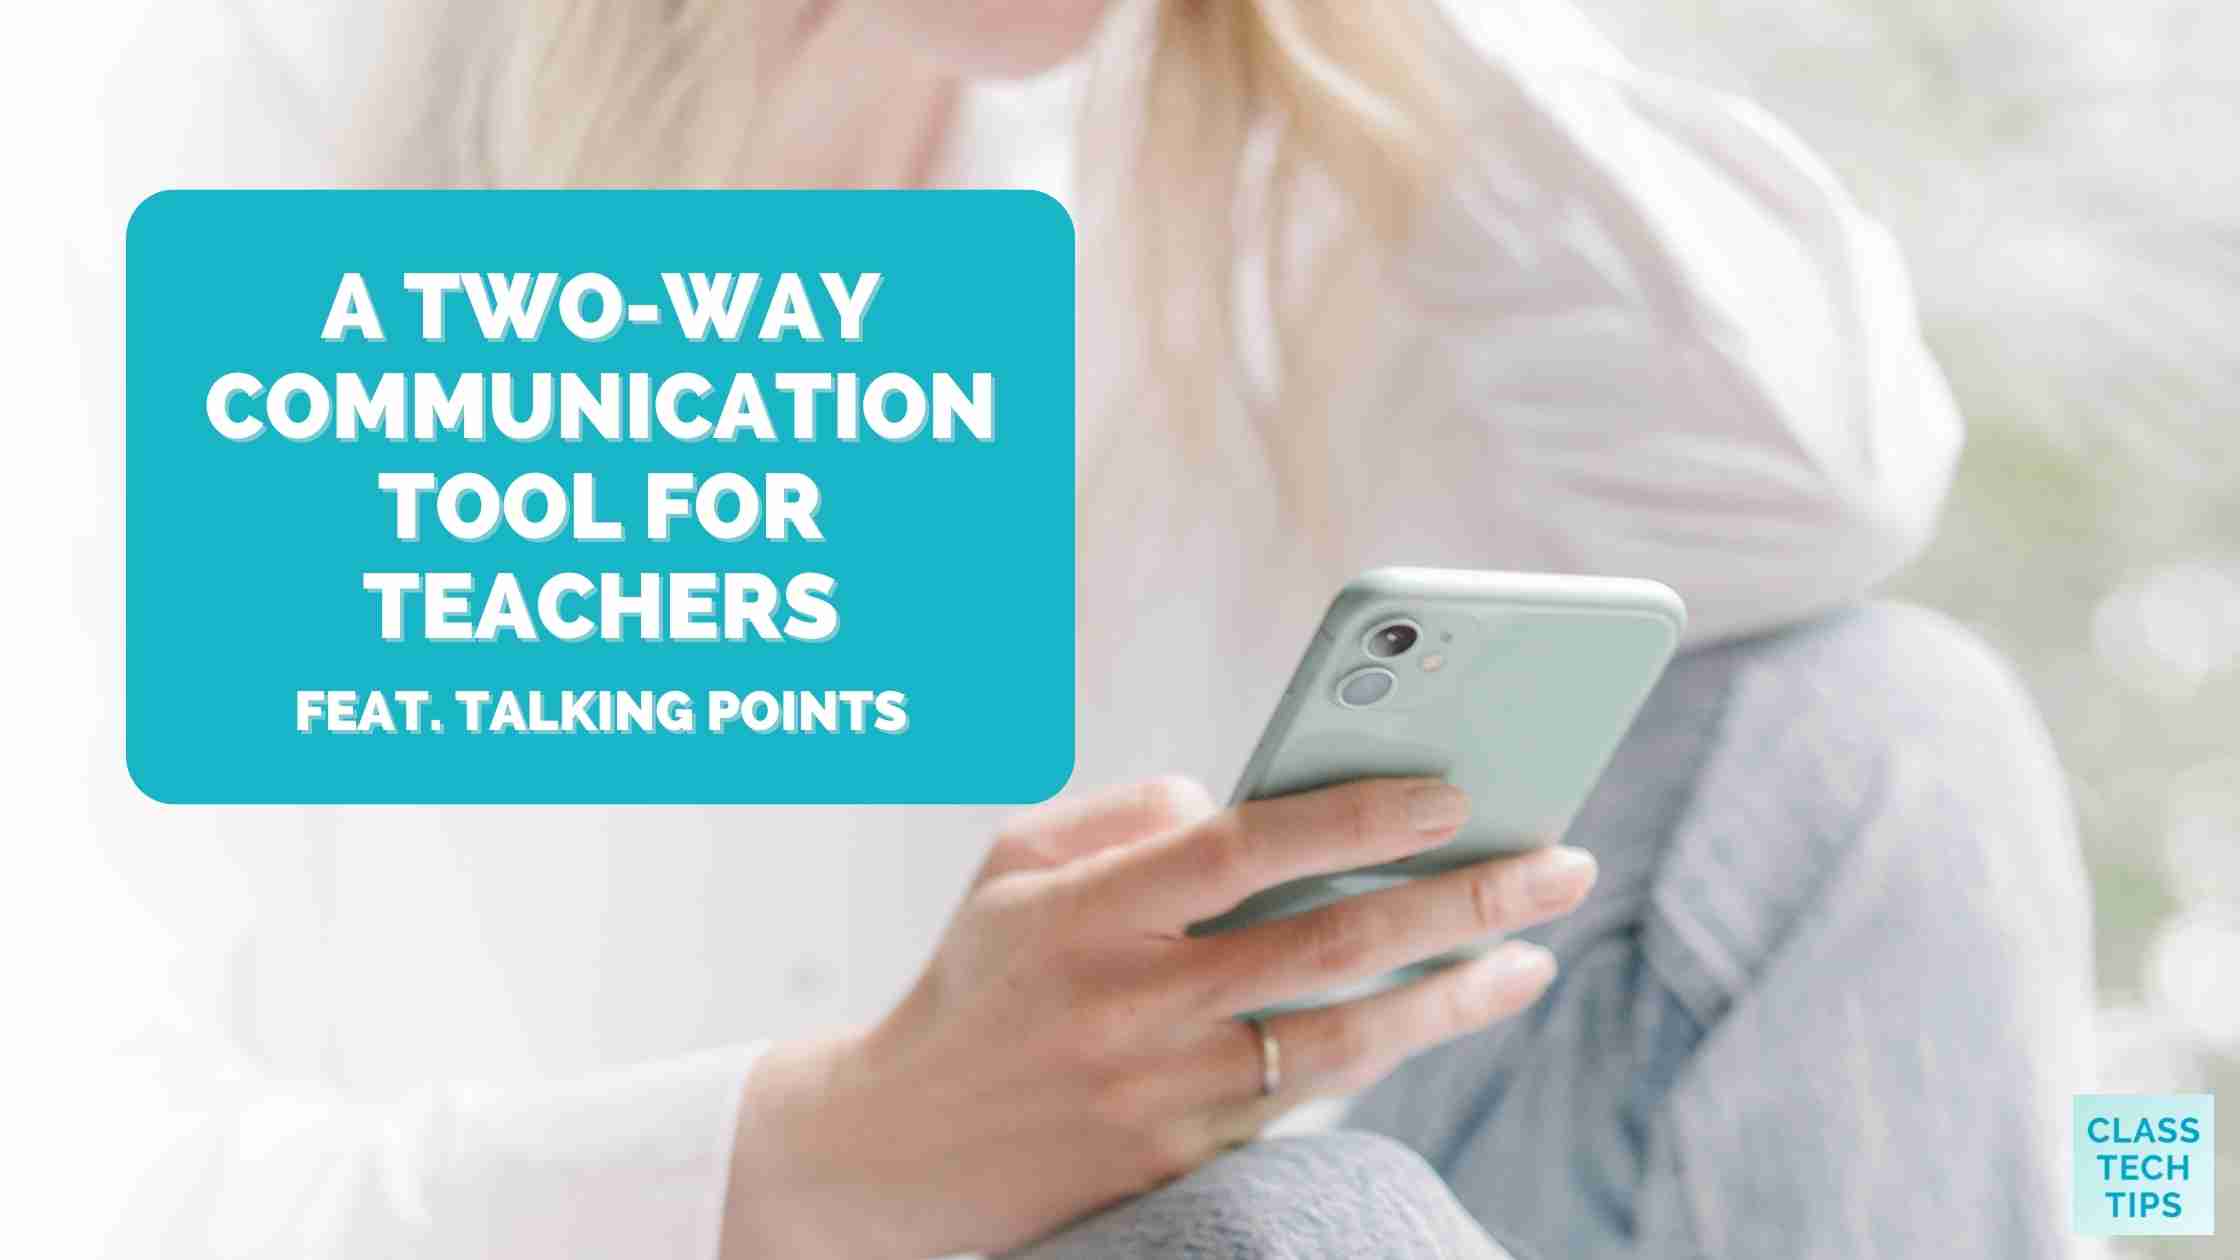 A Two-Way Communication Tool for Teachers - Class Tech Tips